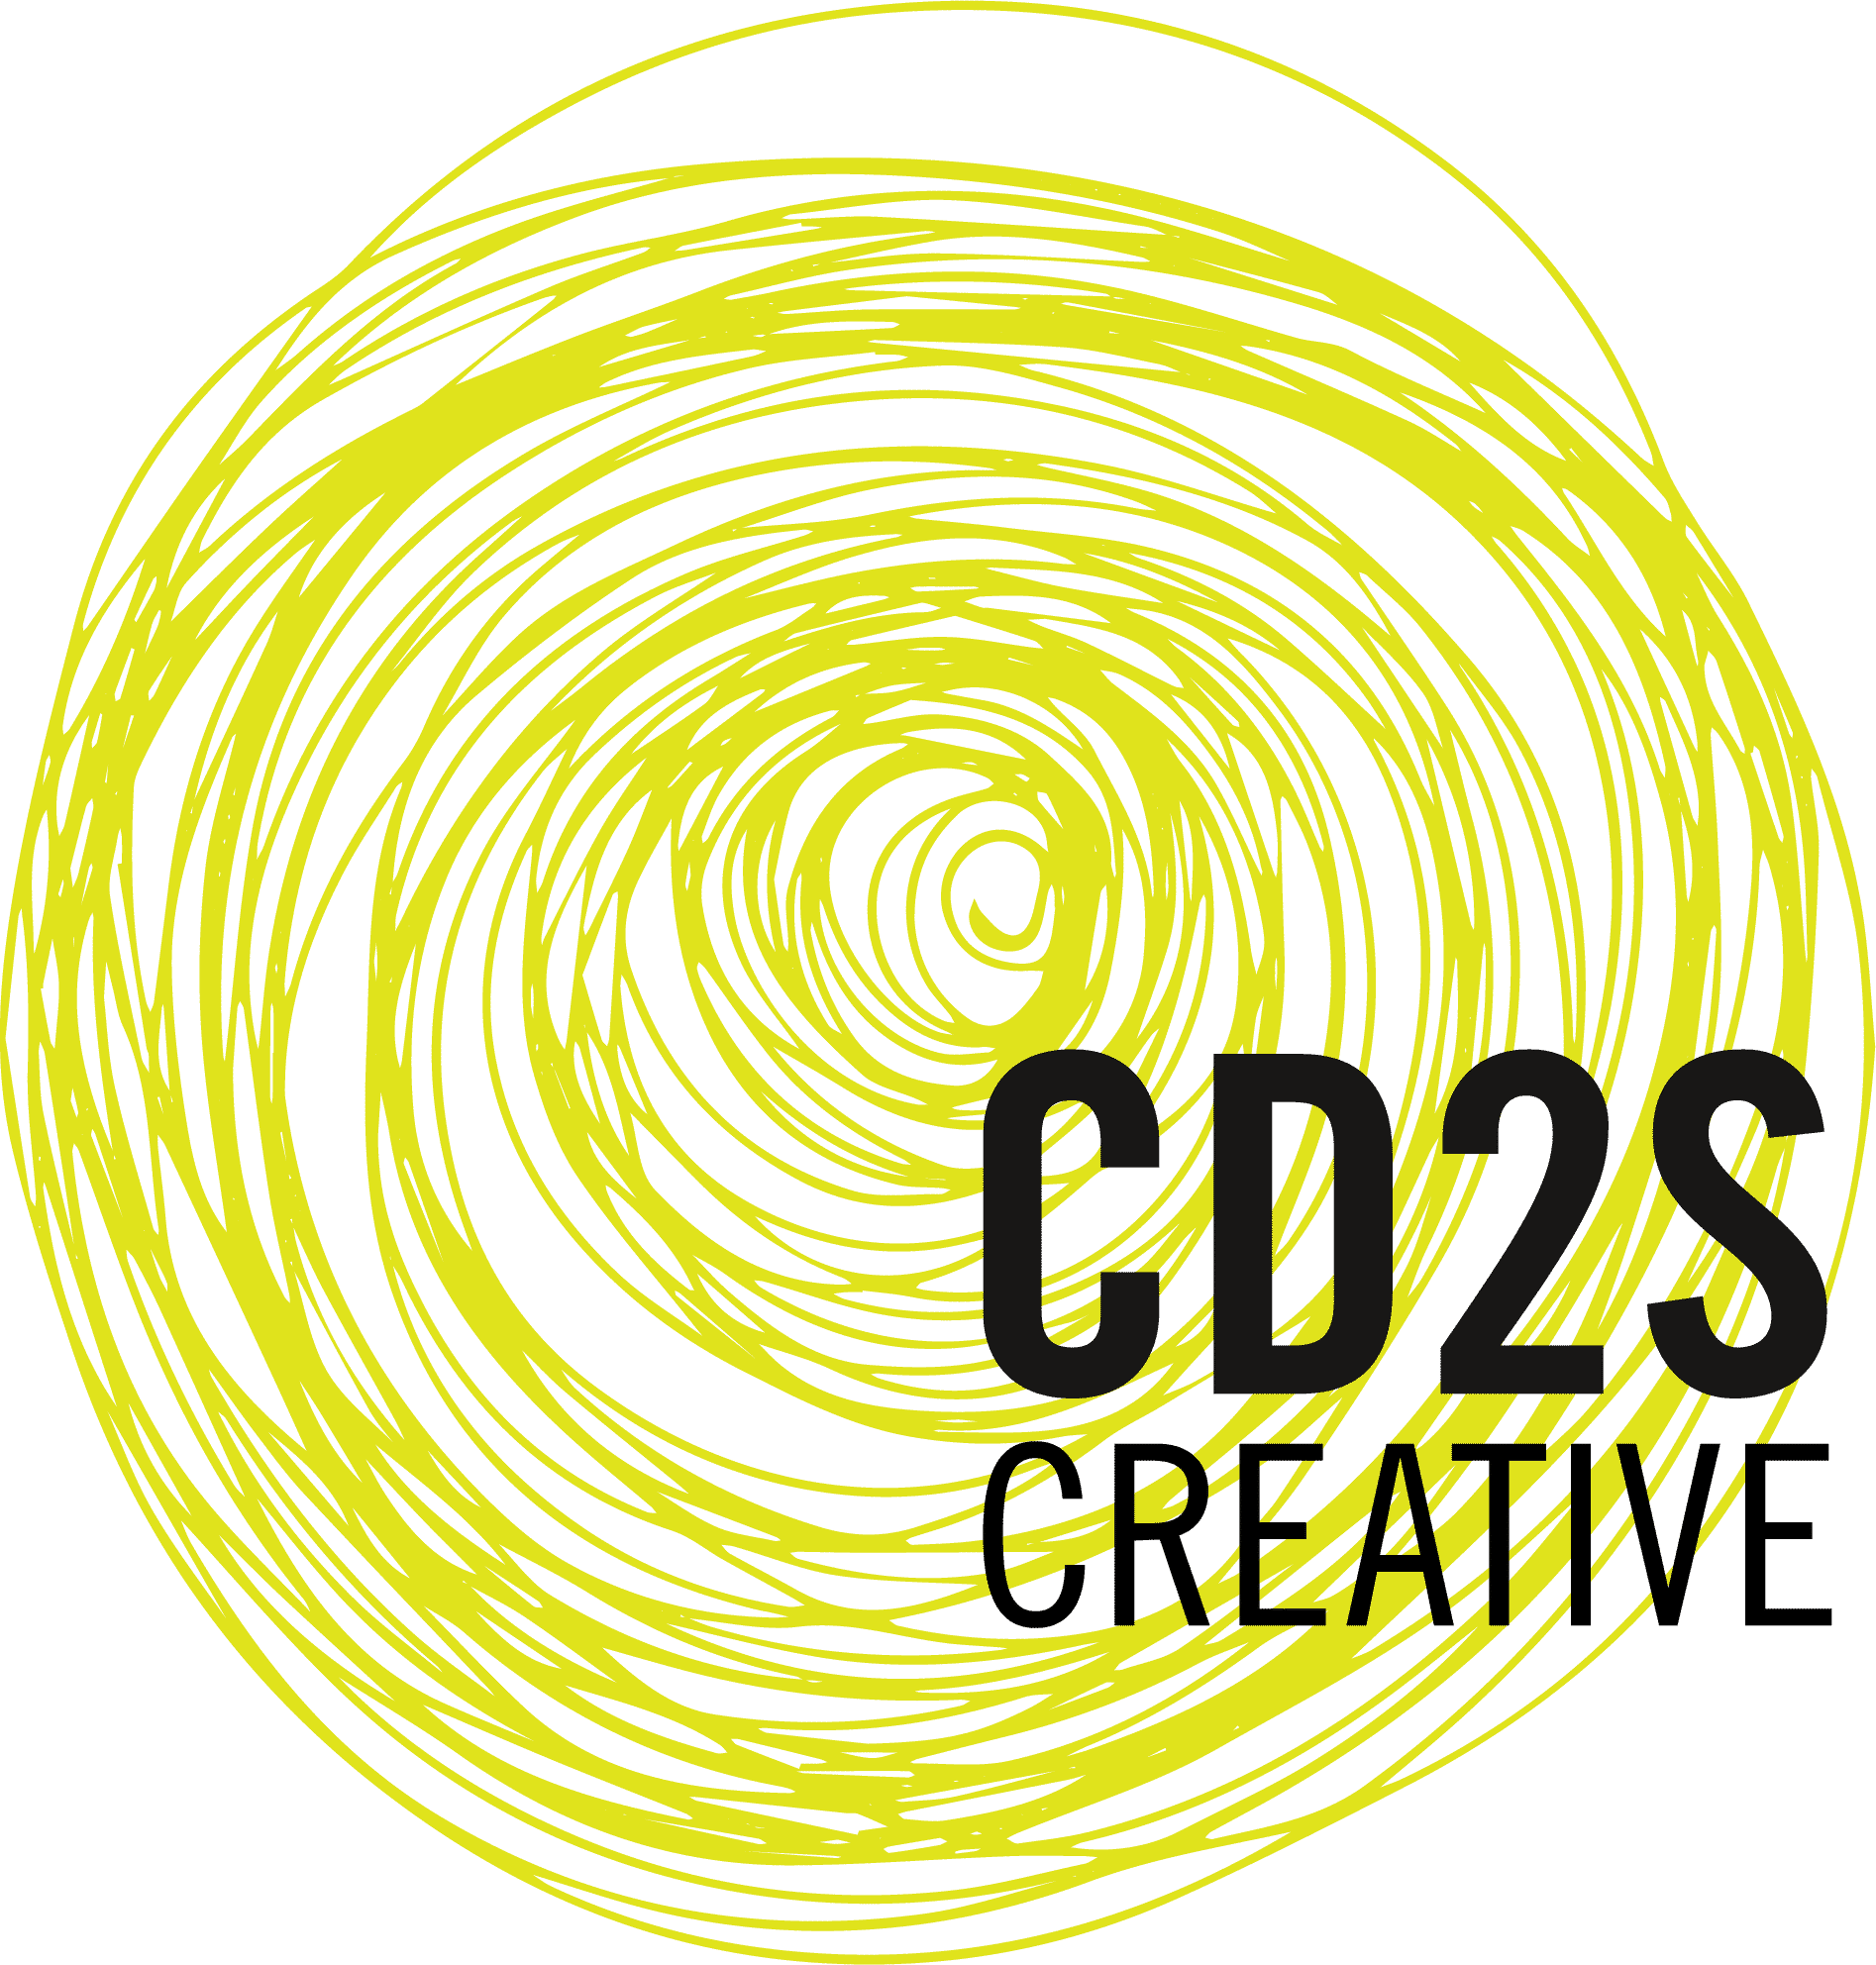 cd2s creative